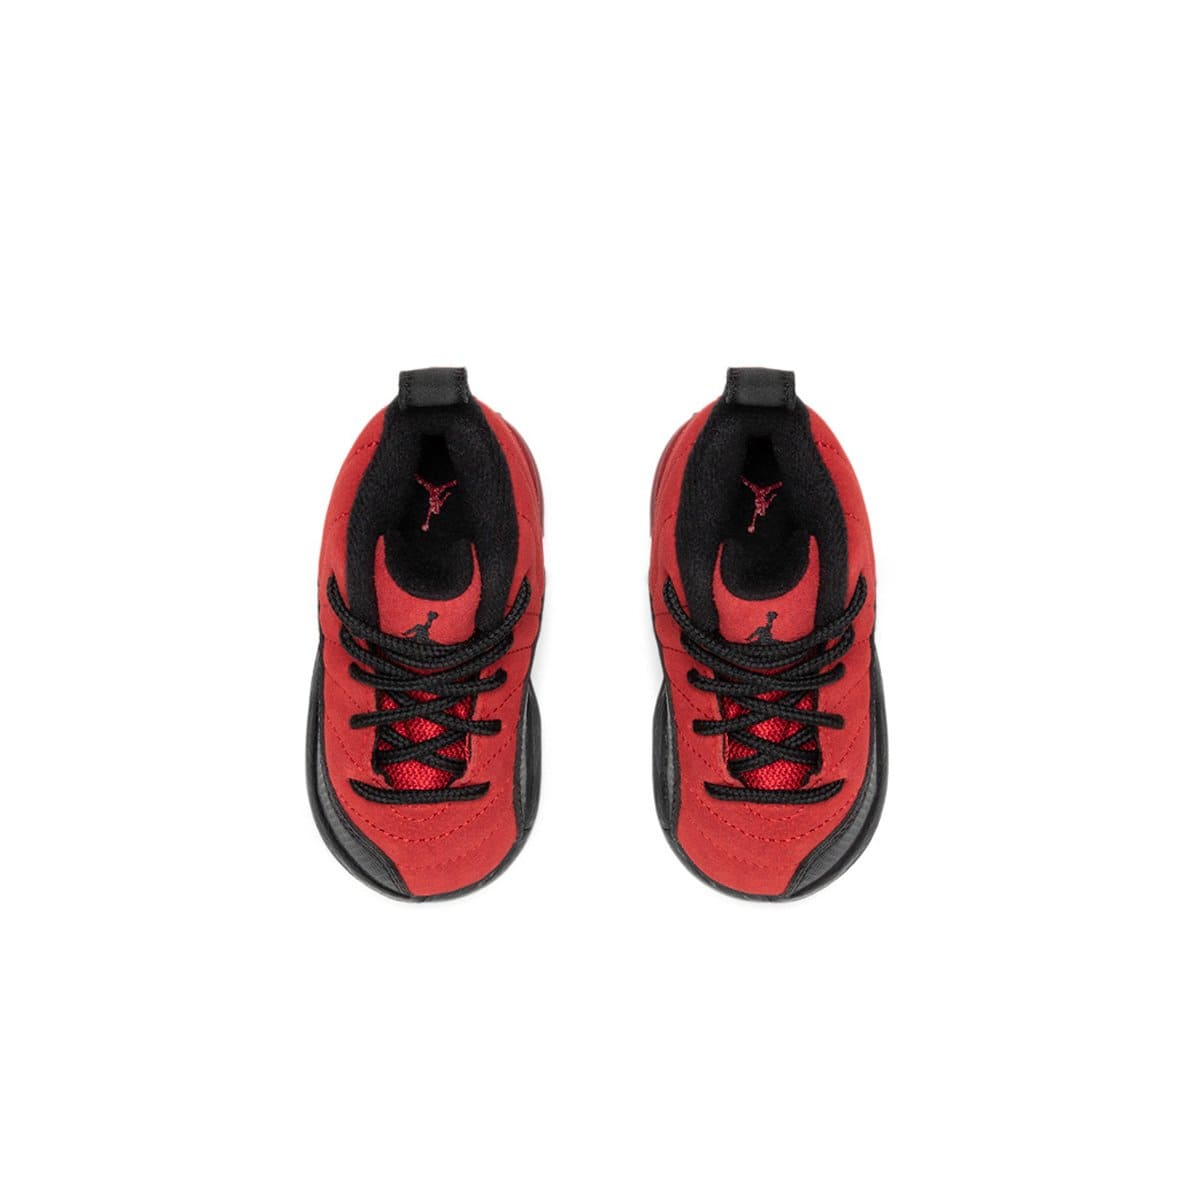 Air Jordan Shoes AIR JORDAN 12 RETRO (TD)